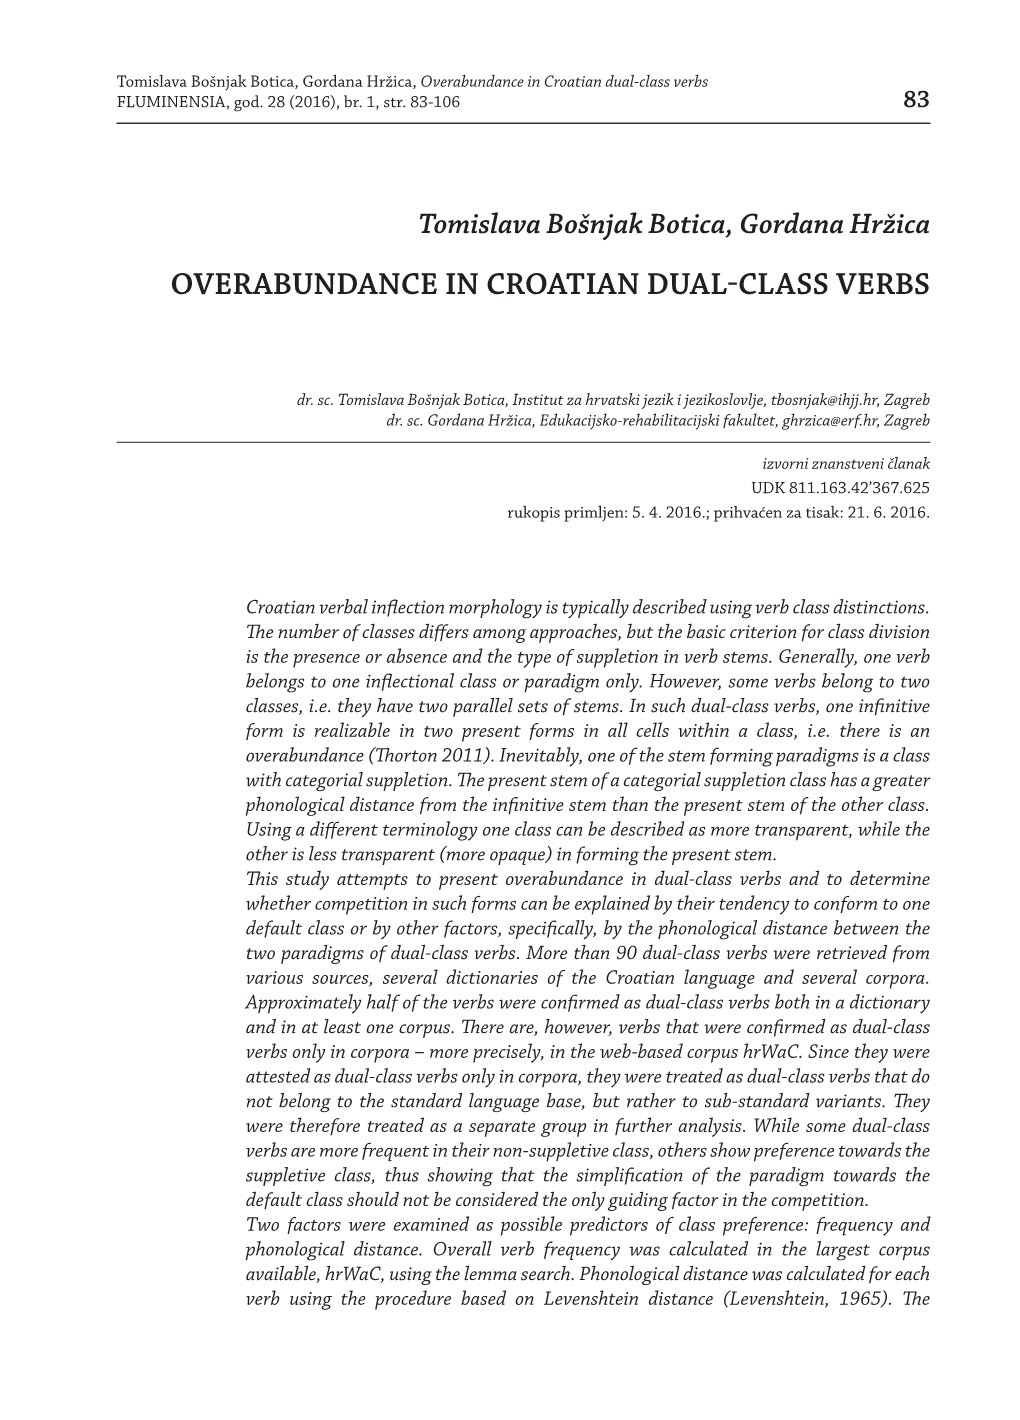 Overabundance in Croatian Dual-Class Verbs FLUMINENSIA, God